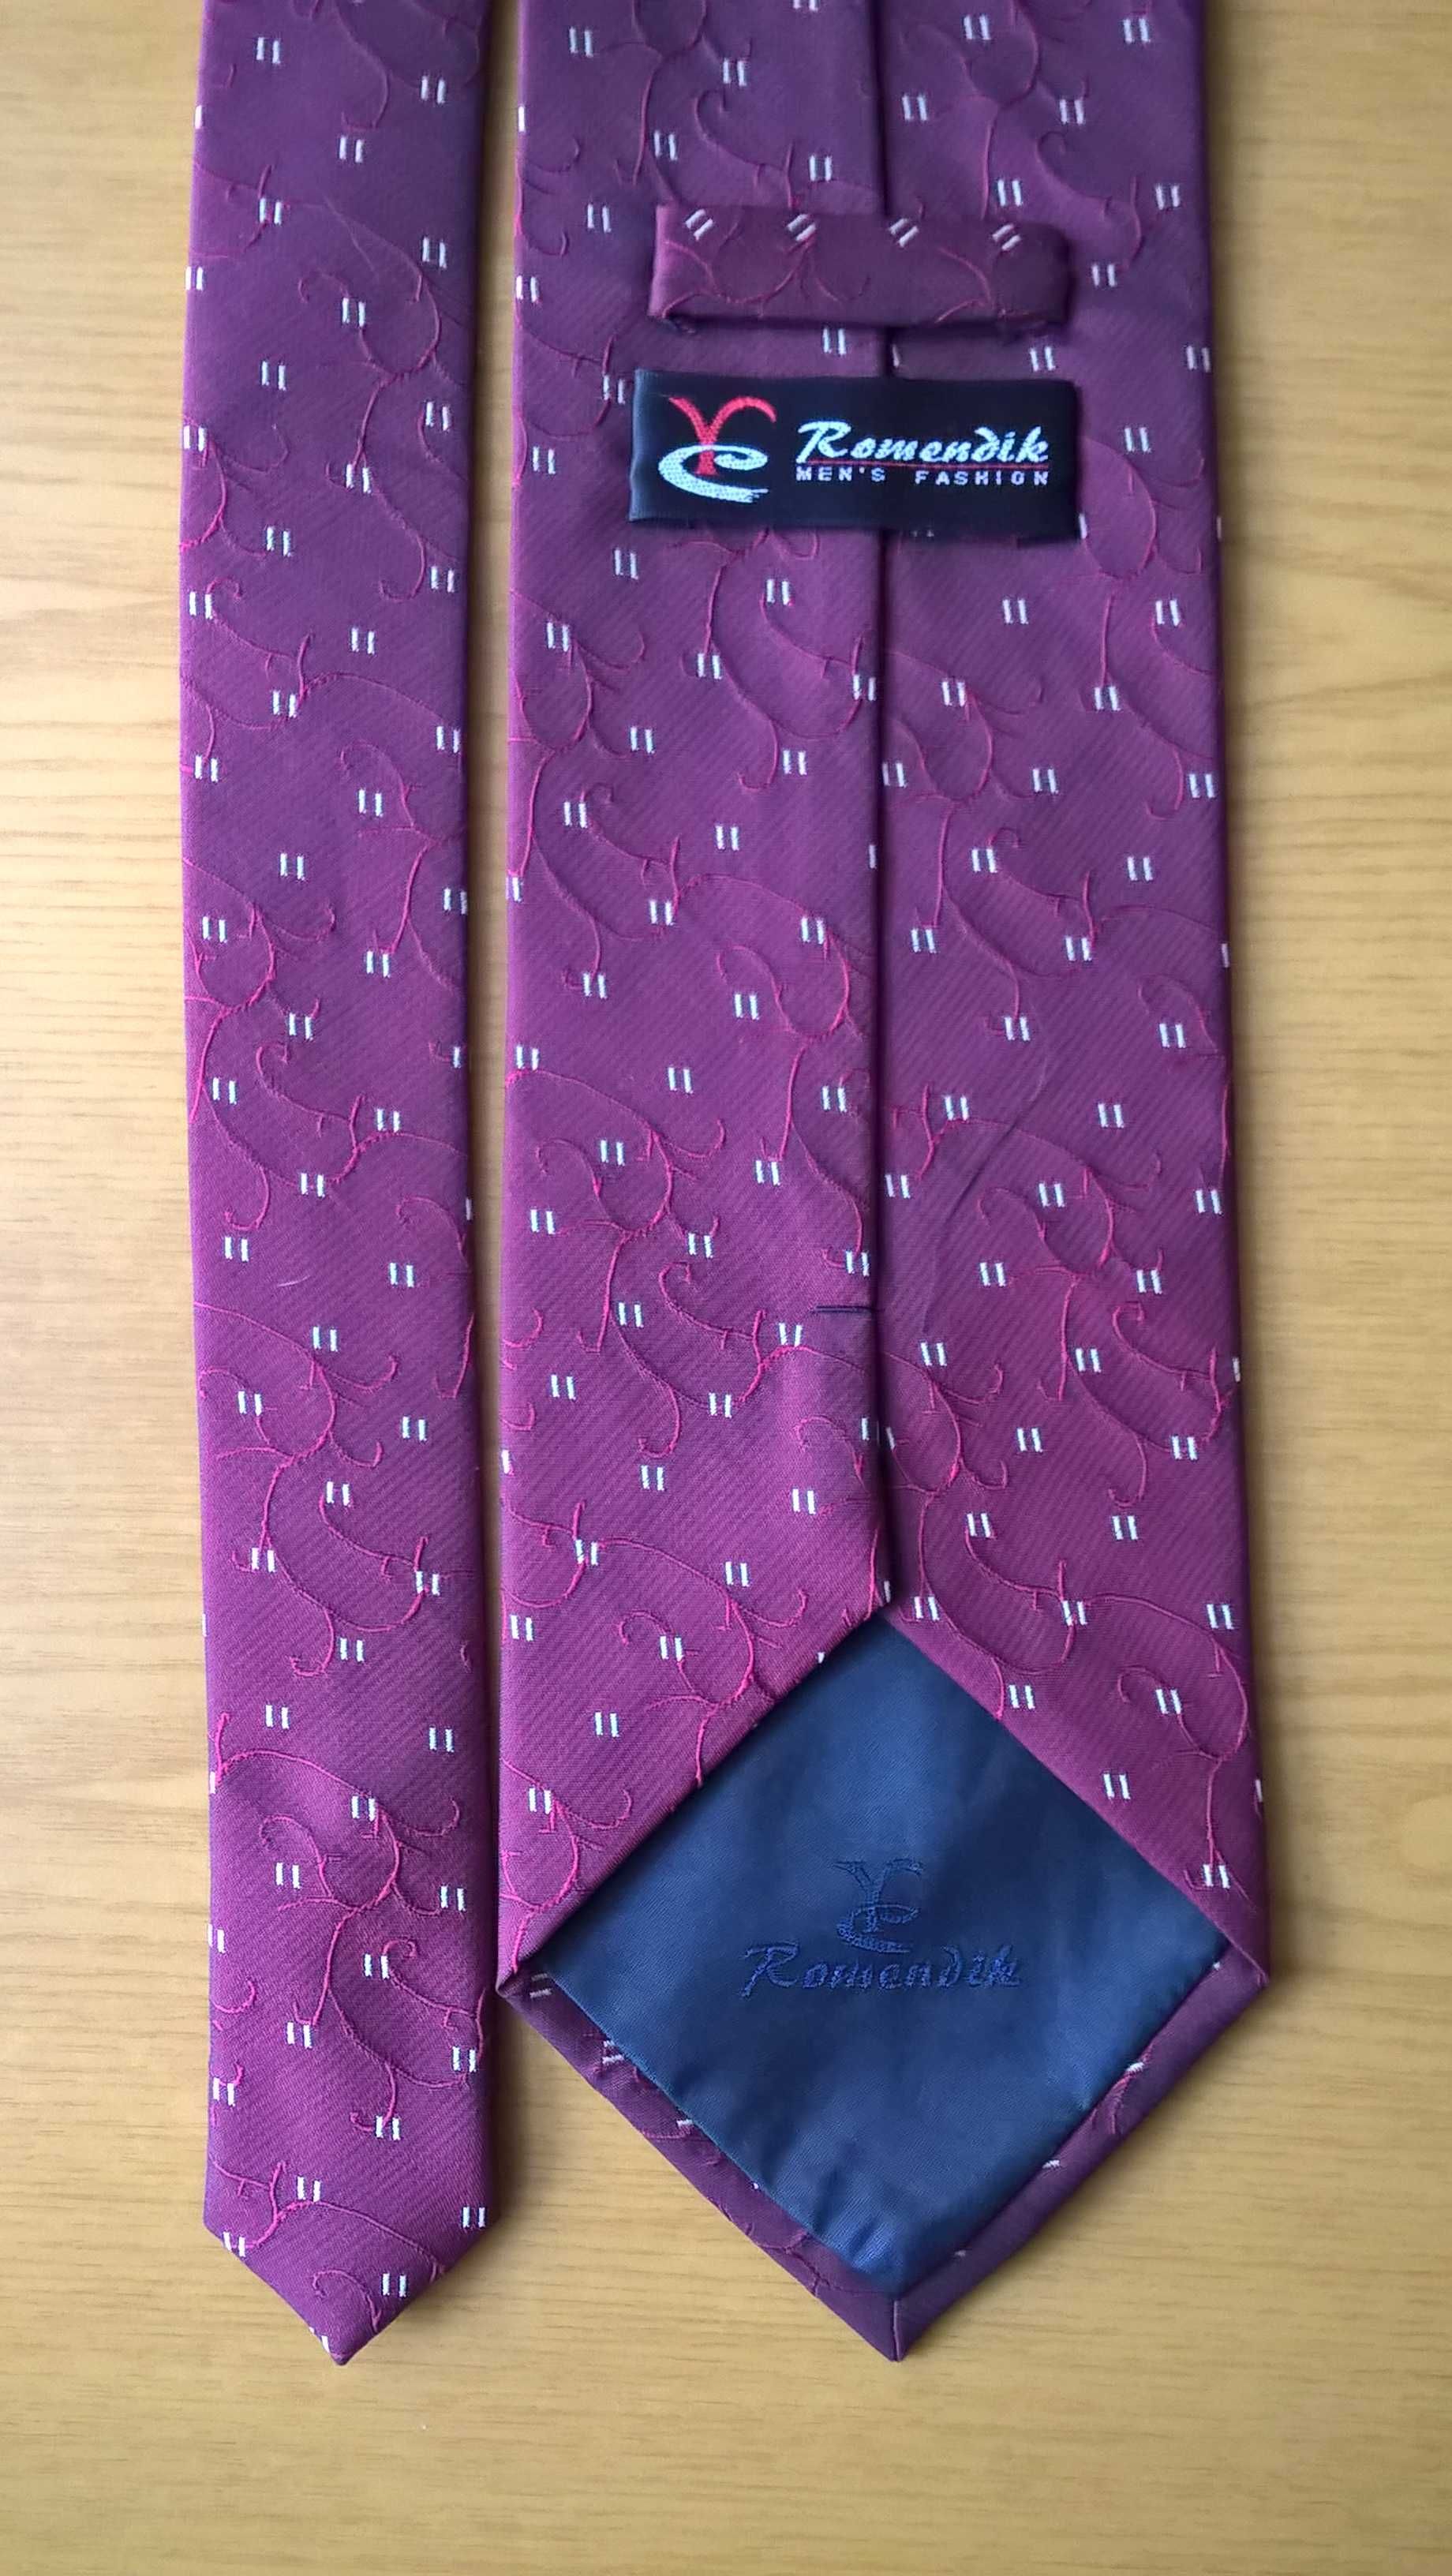 Краватка (галстук)_ROMENDIK_1,50 х 0,10 х 0,04.